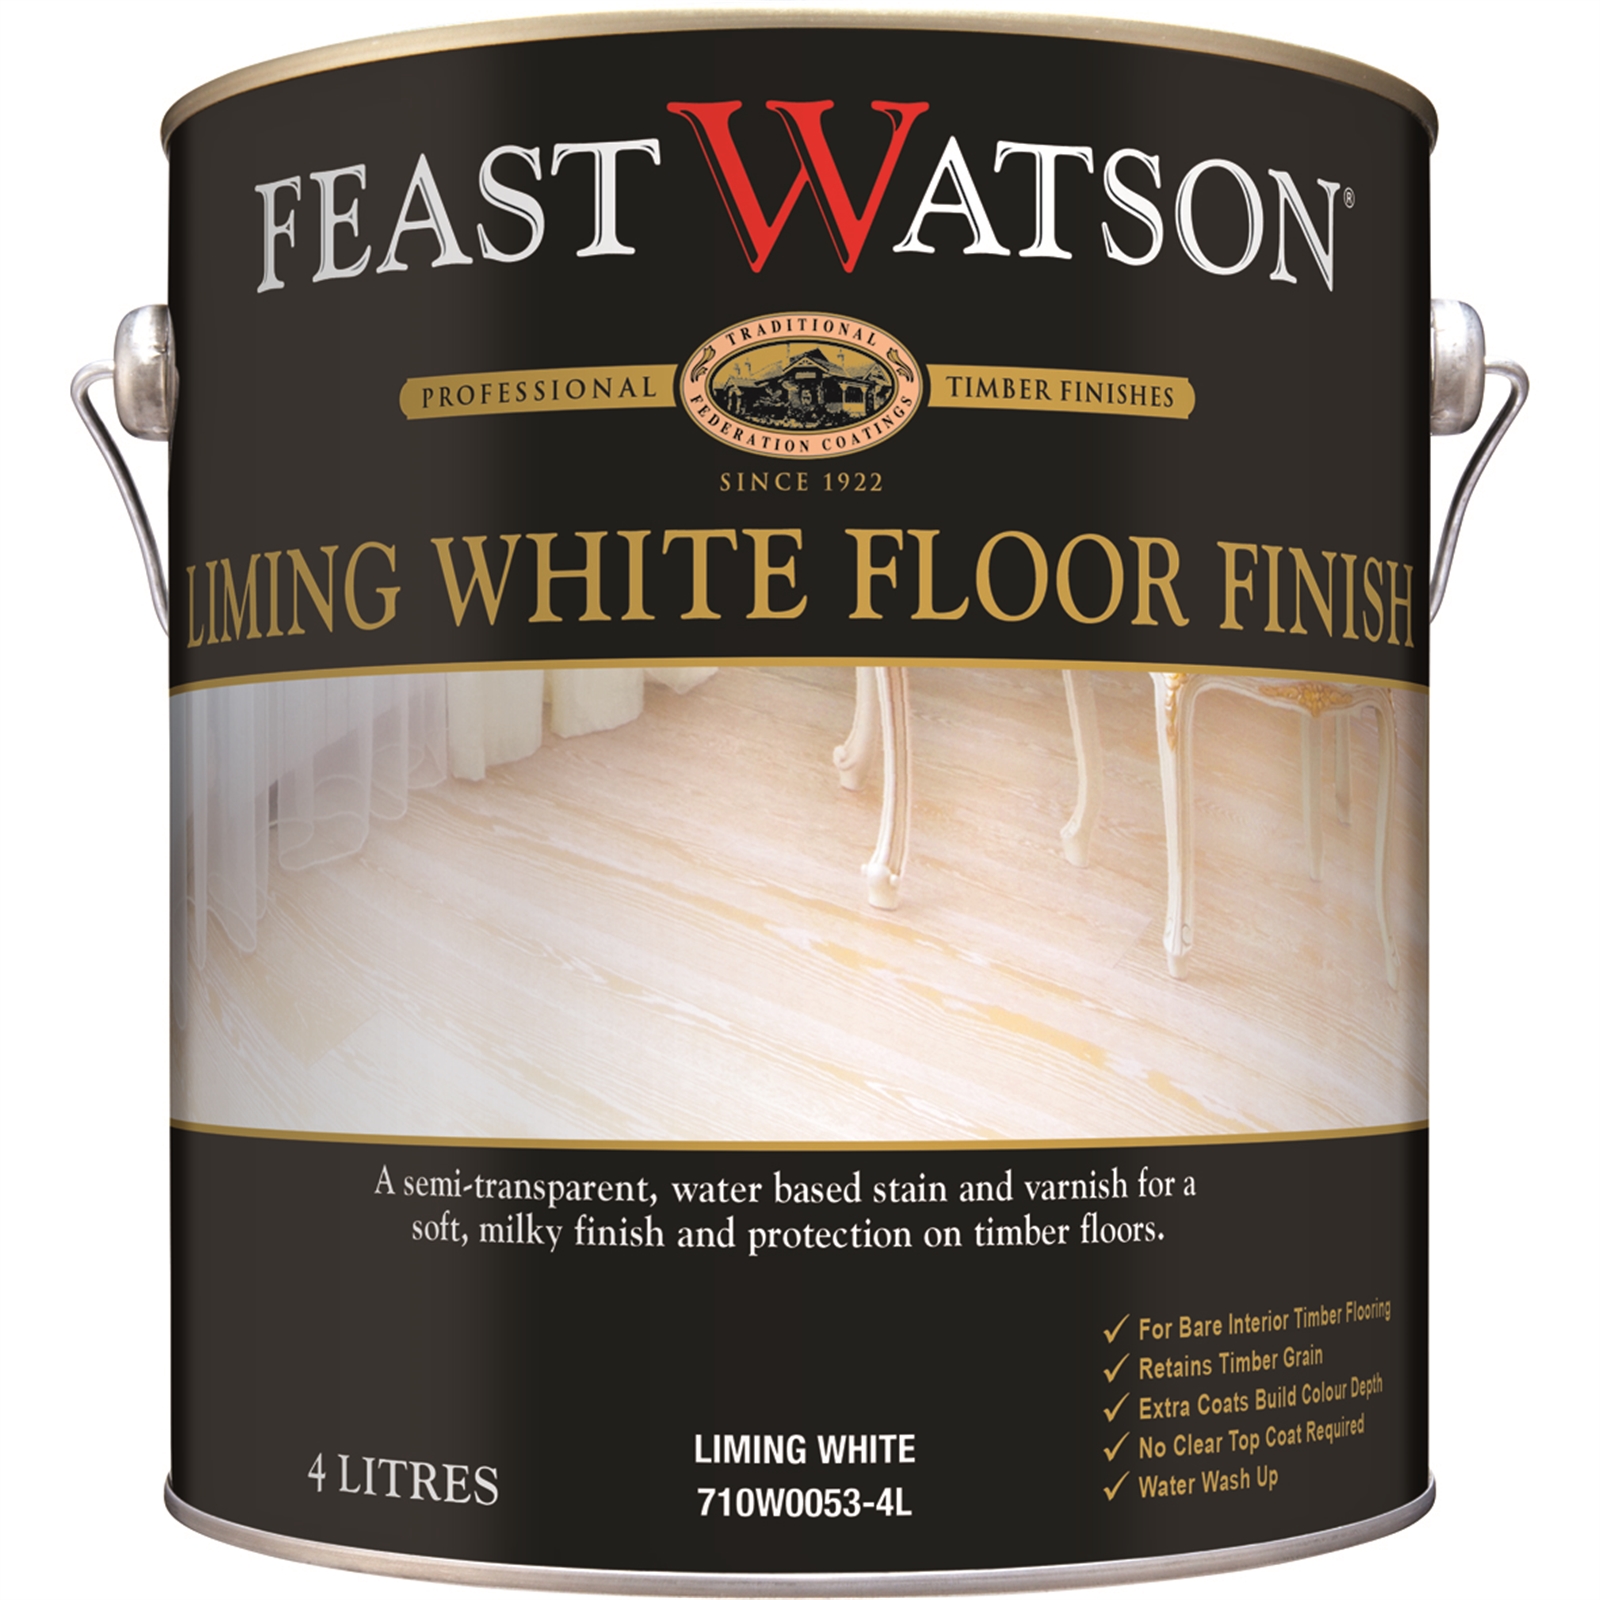 Feast Watson 4L Satin Liming White Floor Finish